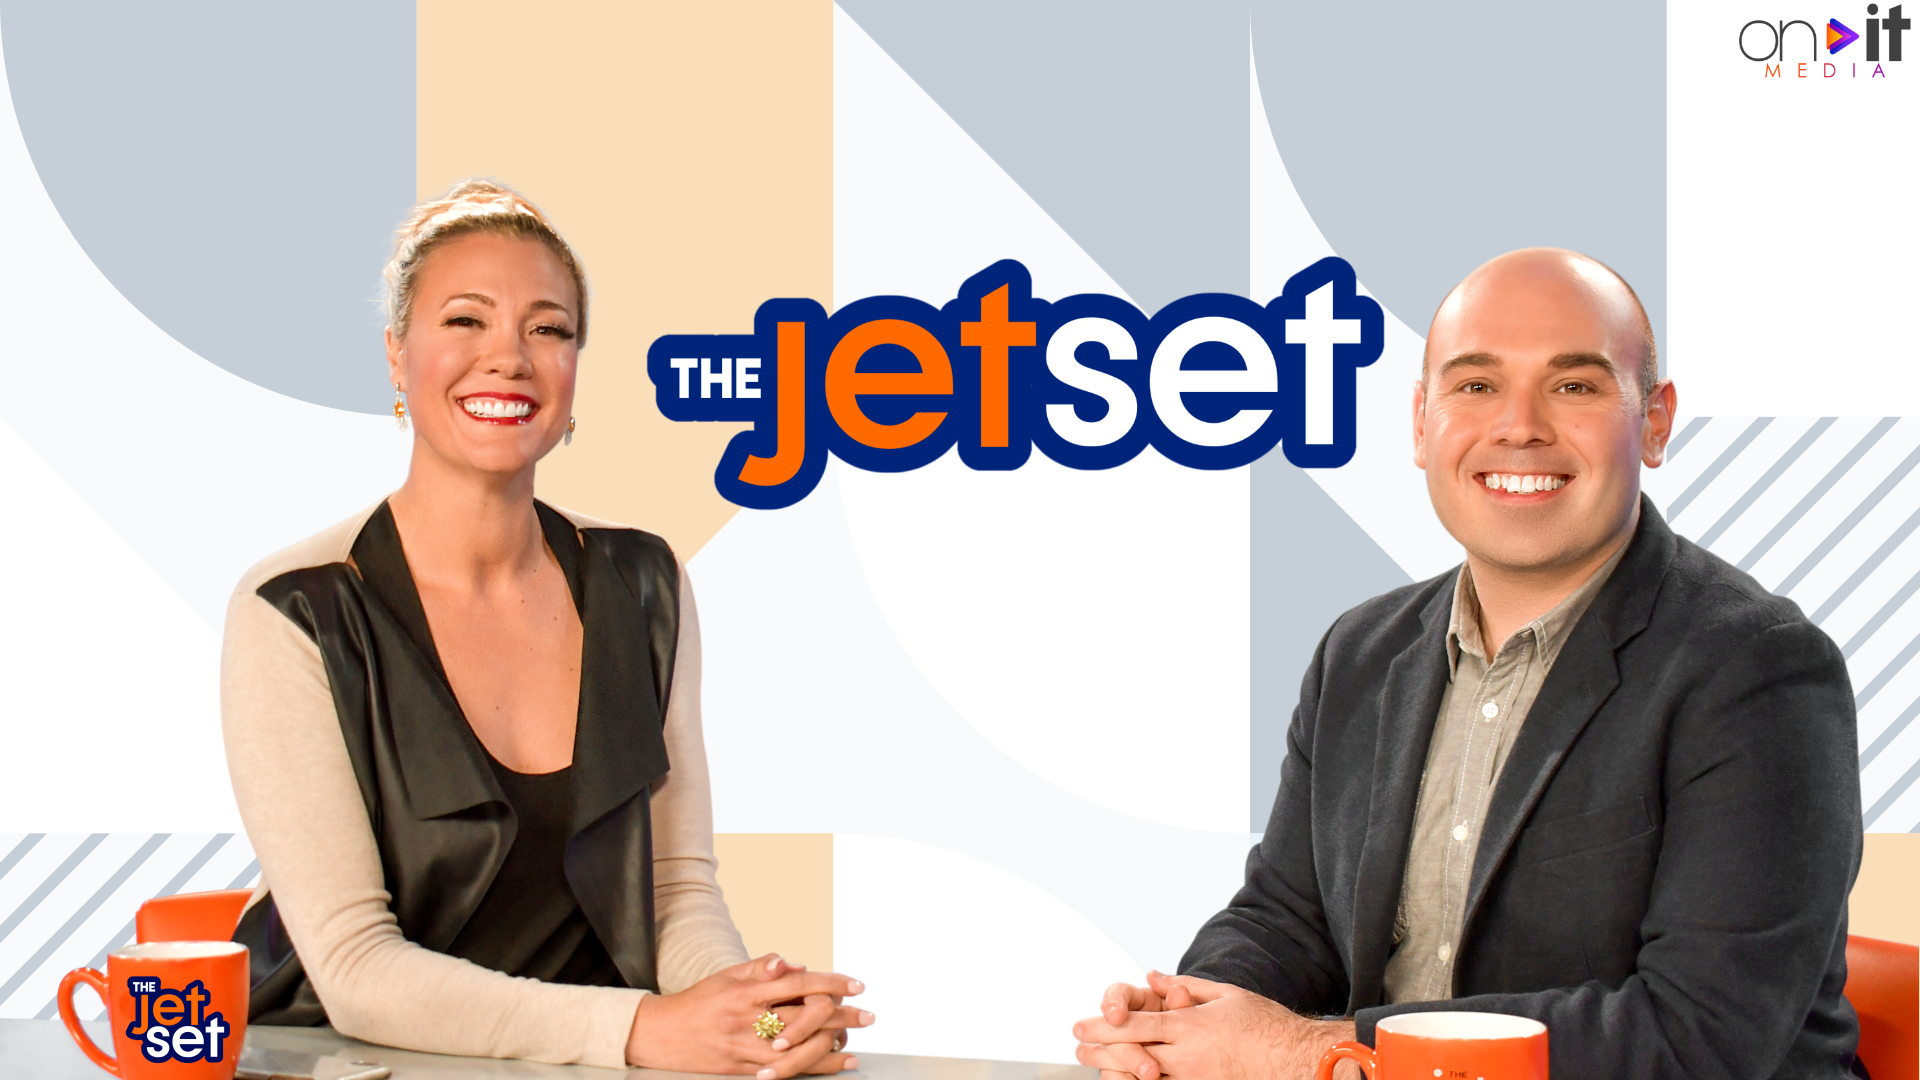 Travel & Lifestyle TV Show "The Jet Set" Lands Two Season Pick-Up